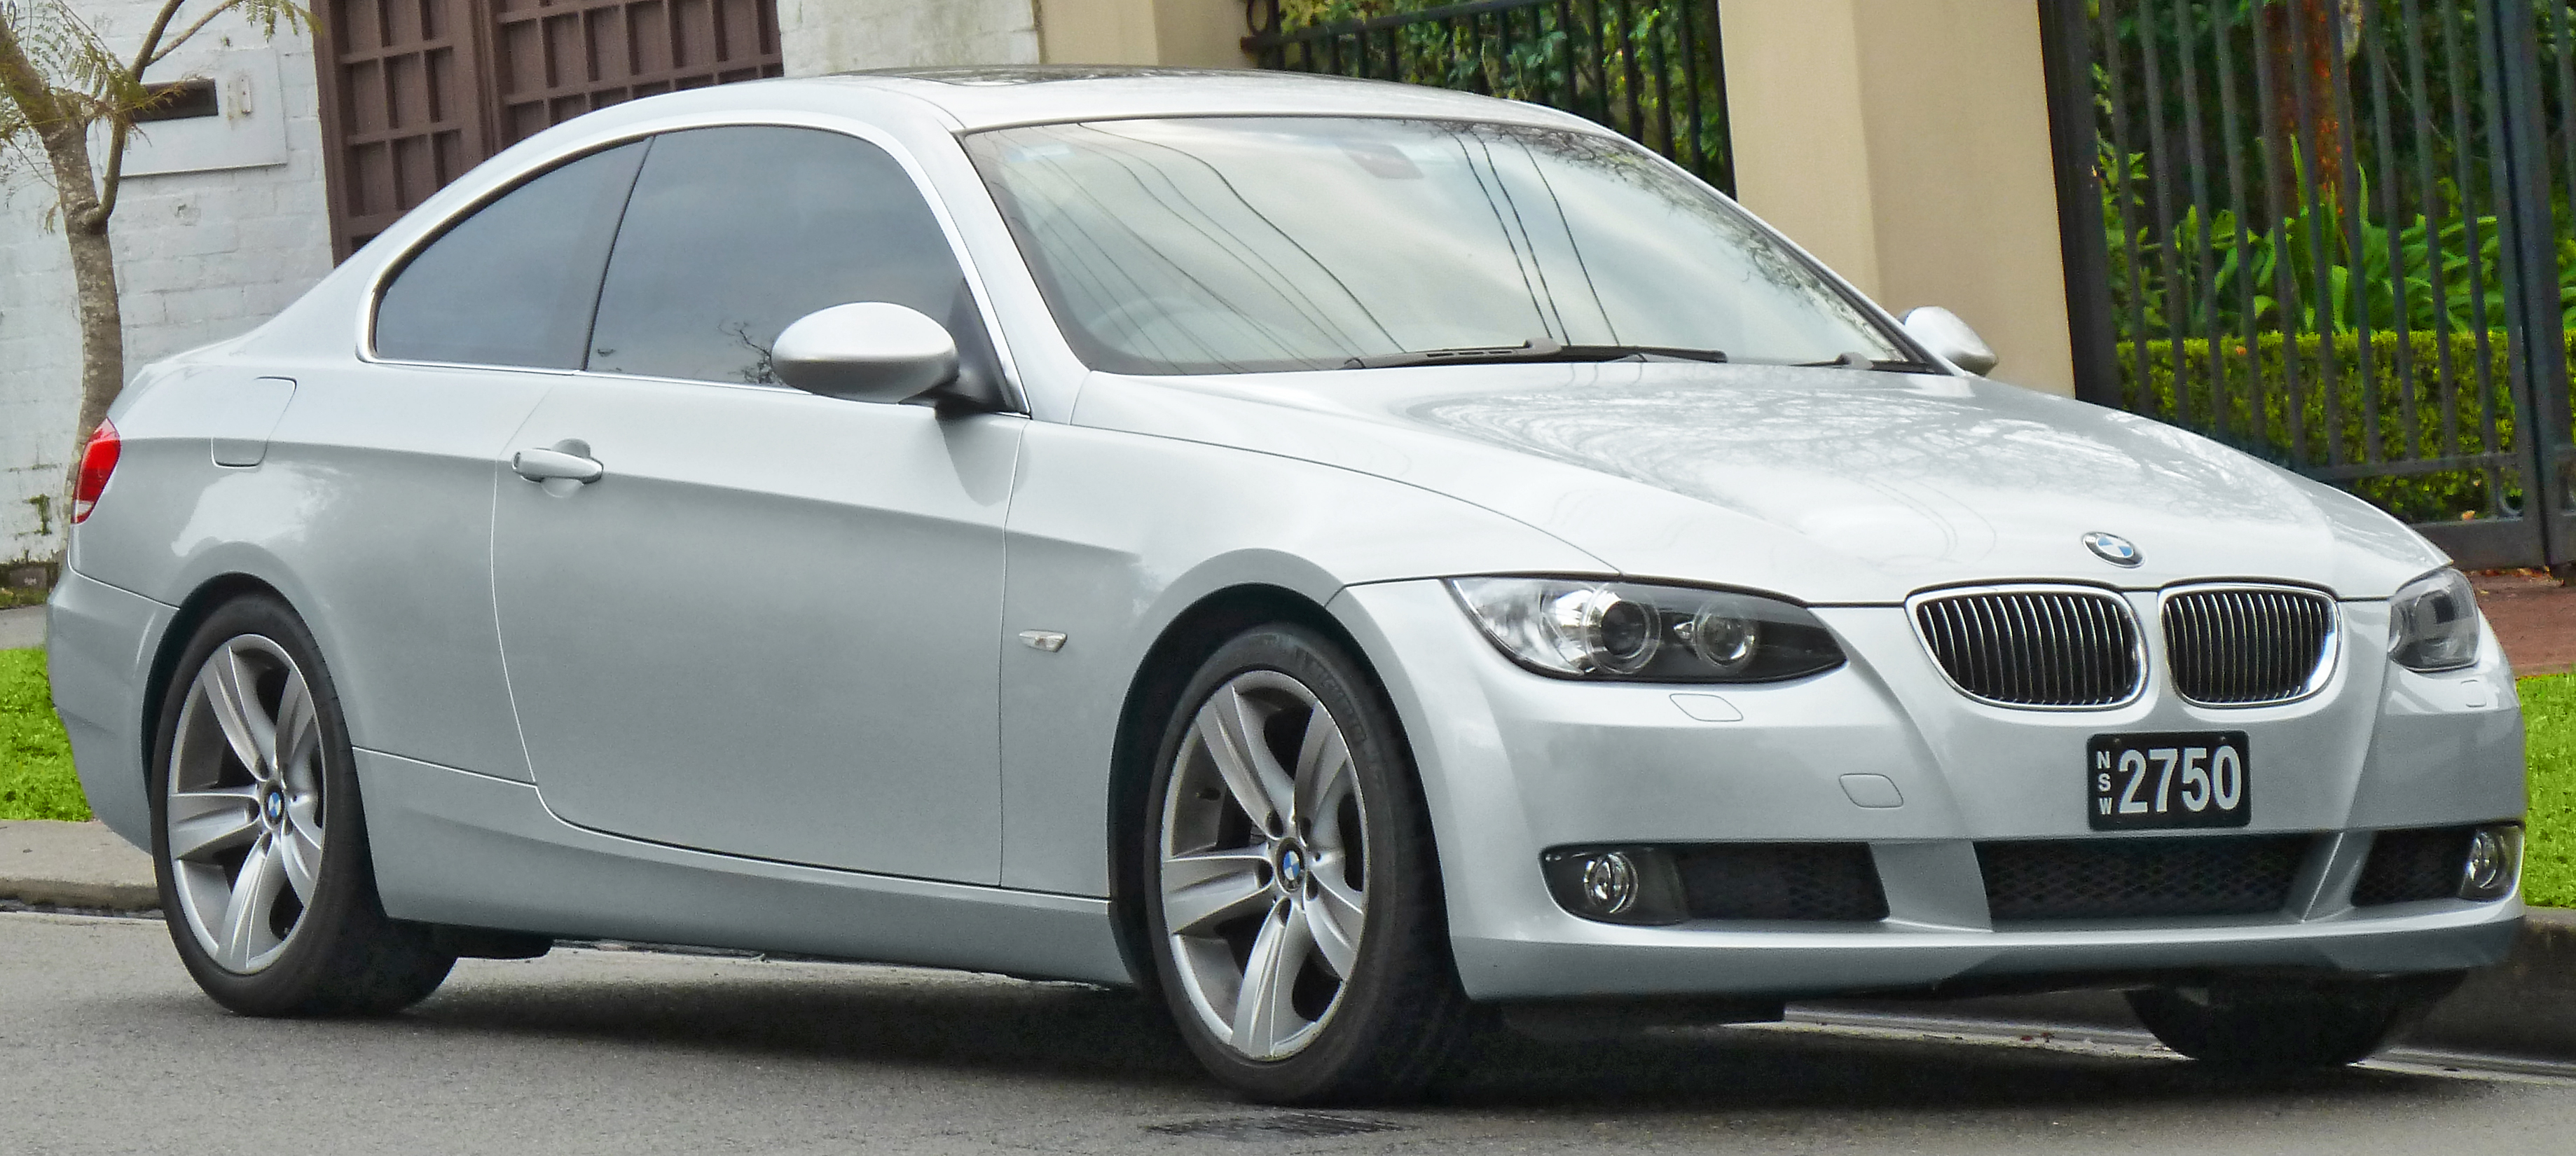 Автозапчасти на автомобиль BMW E92 (БМВ E92): обзор